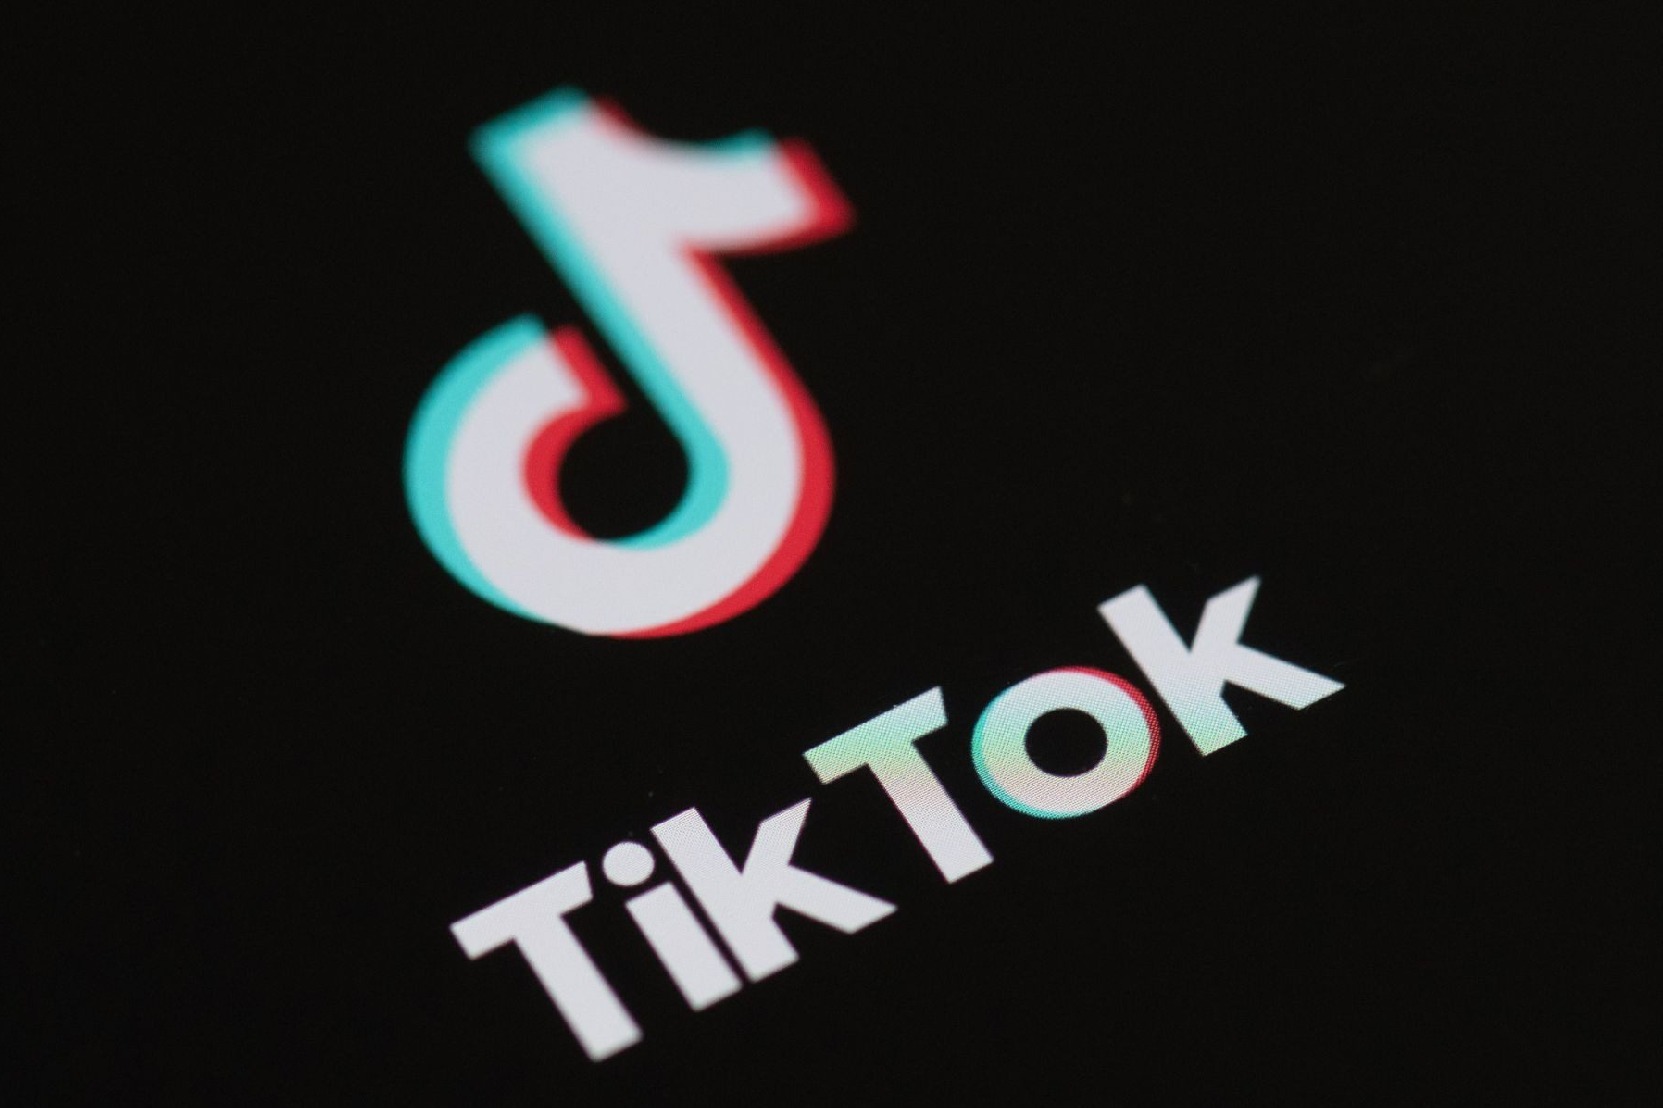 Video sharing app Tik Tok declines Microsoft offer